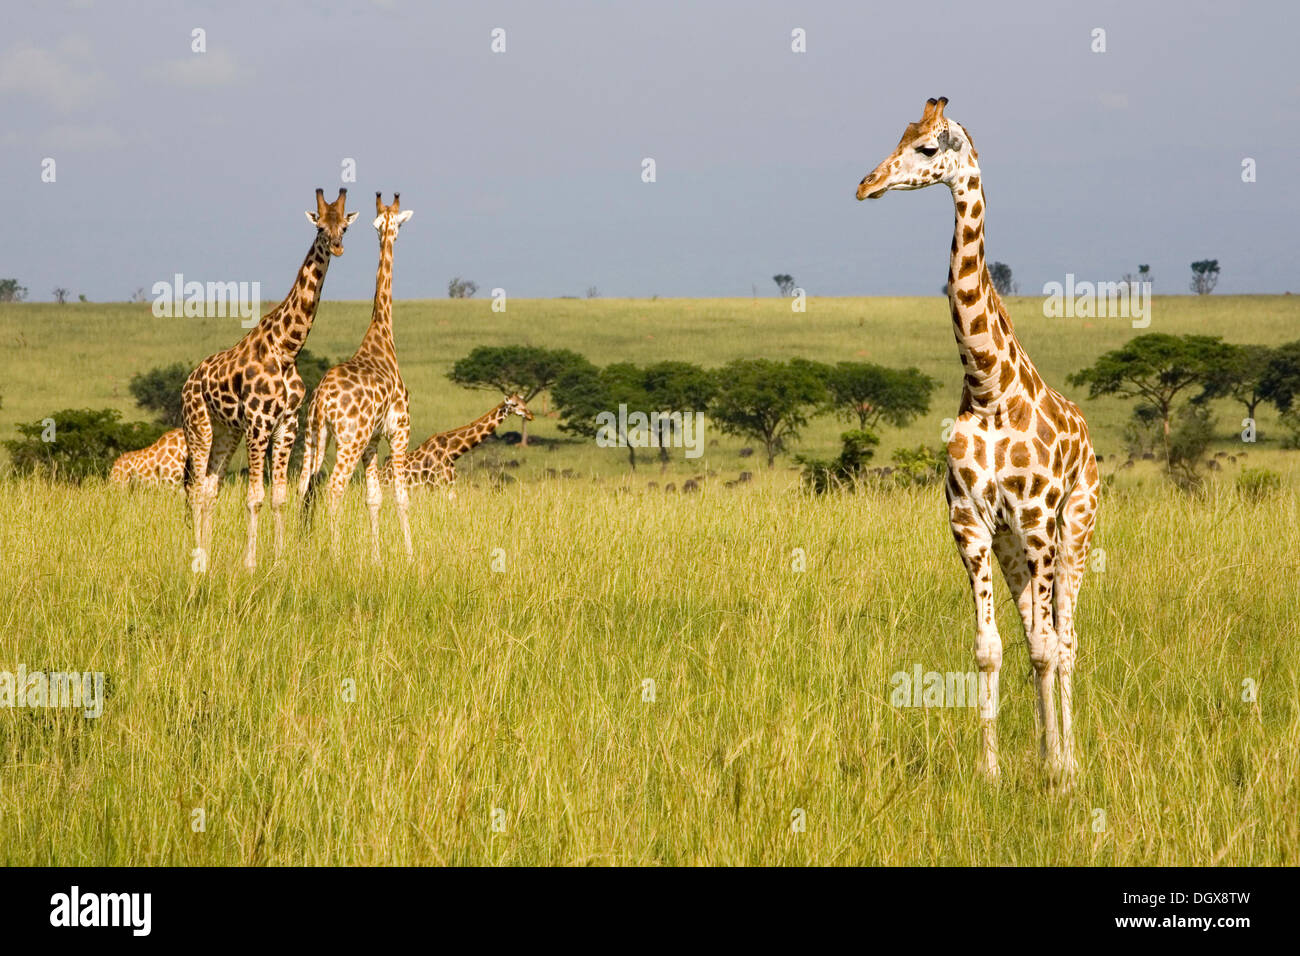 Rothschild o ugandés Jirafas (Giraffa camelopardalis), subespecies en peligro crítico, en la sabana de la Murchison Foto de stock